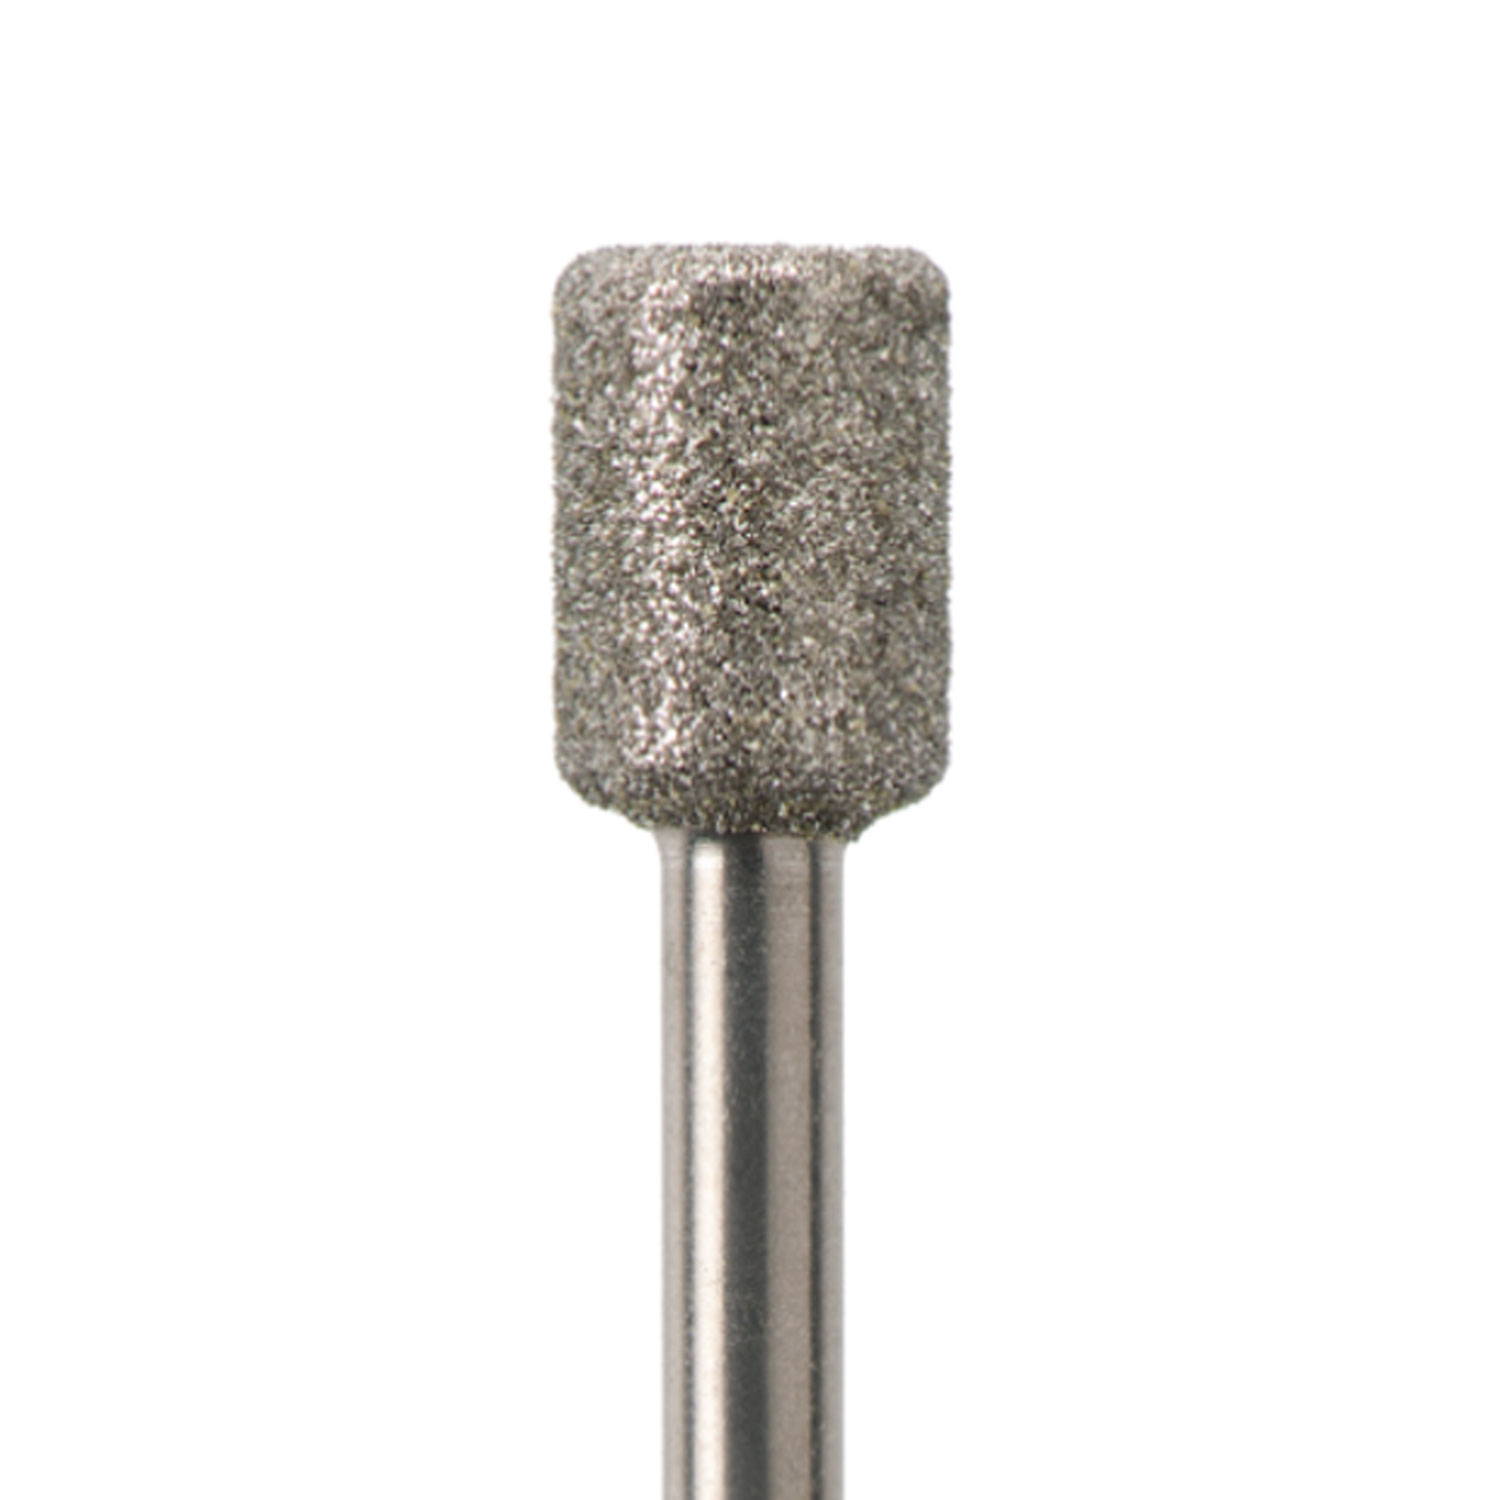 Acurata diamond instruments 524 - medium 5mm  AC-136 ACURATA - Arrow 524 Series - Medium (Silver Ring)